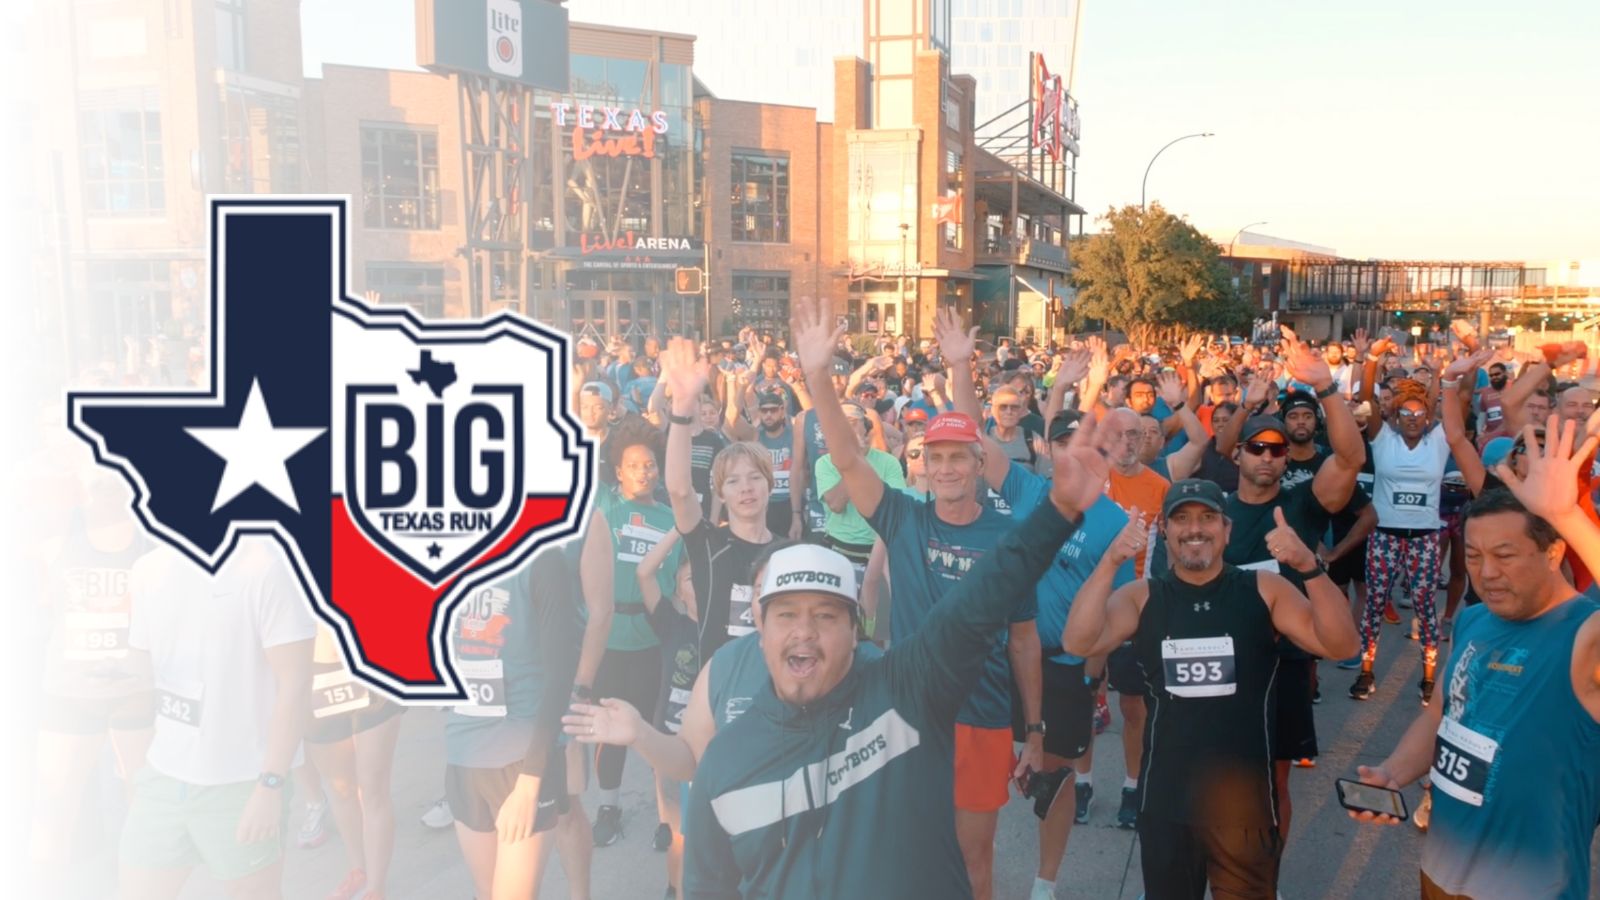 Big Texas Run 2024 - Texas Live in Arlington - Oct 19, Arlington, Texas, United States